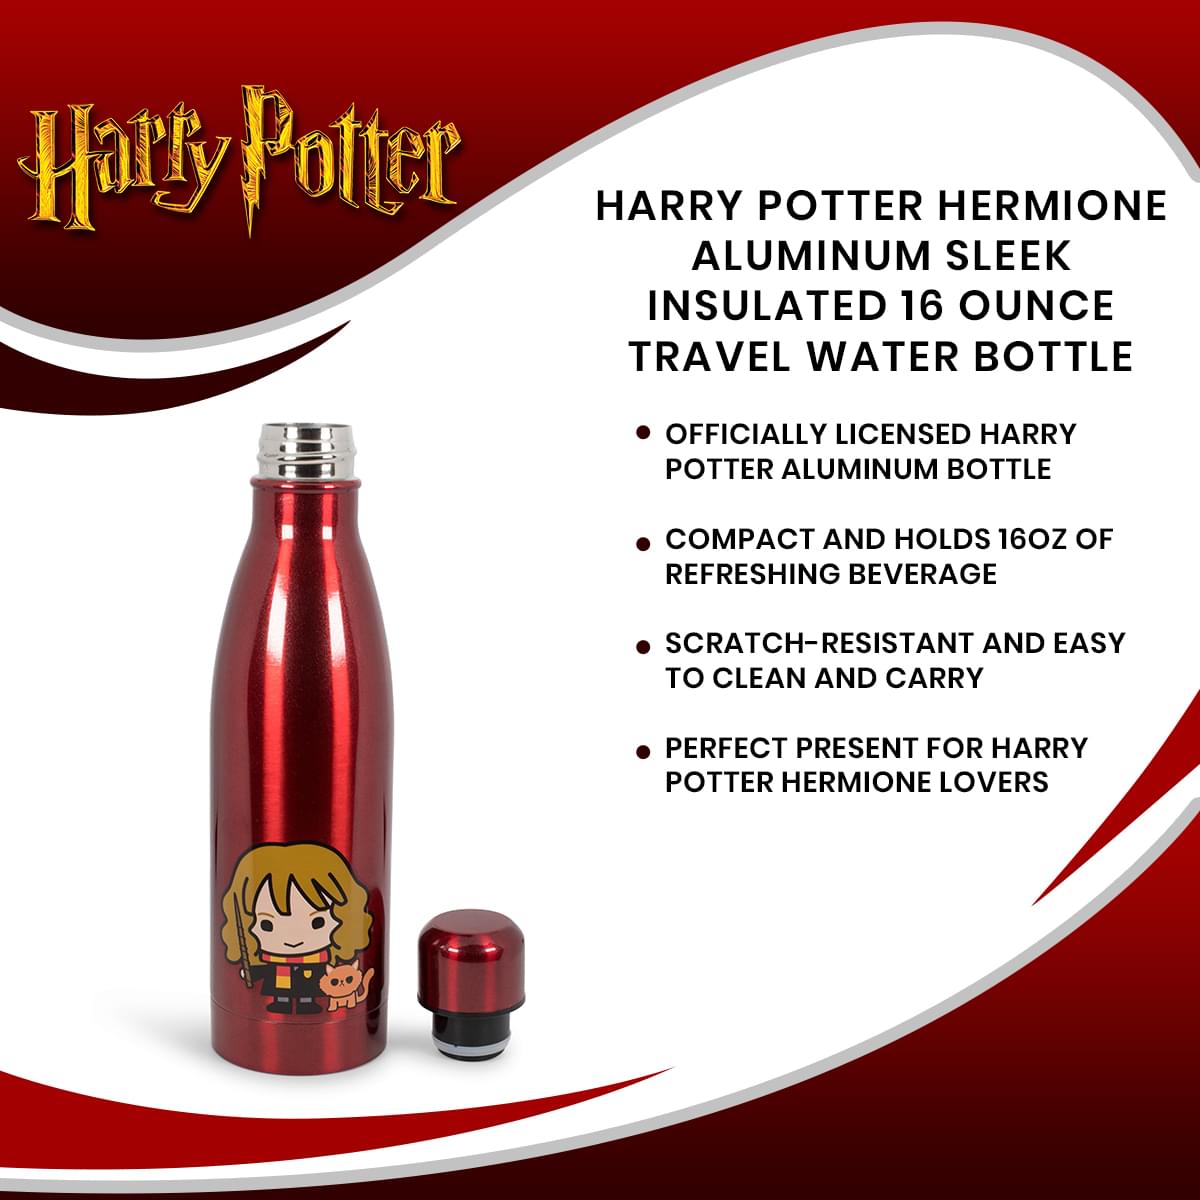 Harry Potter Hermione Aluminum Sleek Insulated 16 Ounce Travel Water Bottle